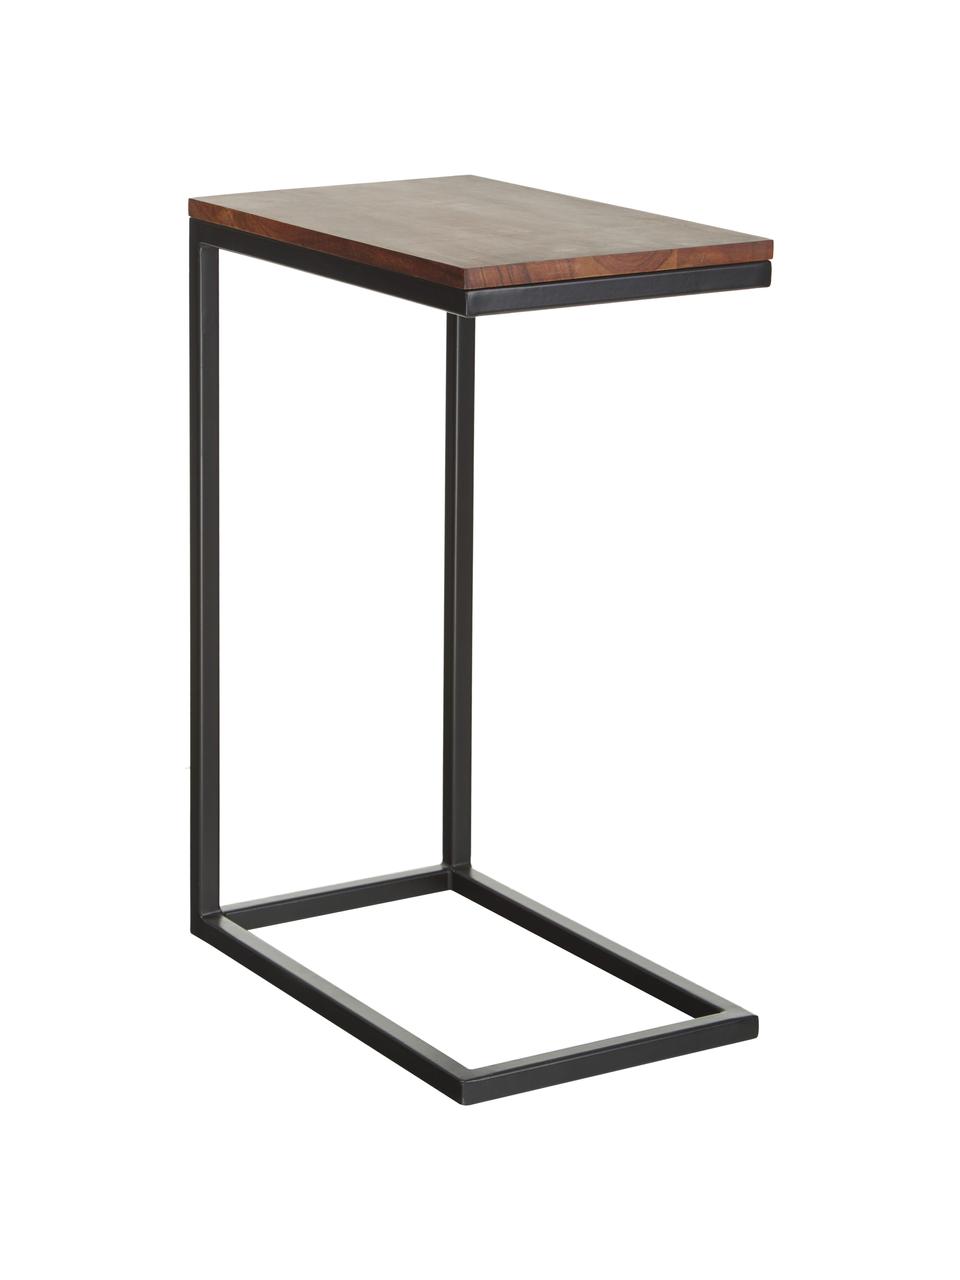 Odkládací stolek z akátového dřeva Celow, Akáciové dřevo, Š 45 cm, V 62 cm